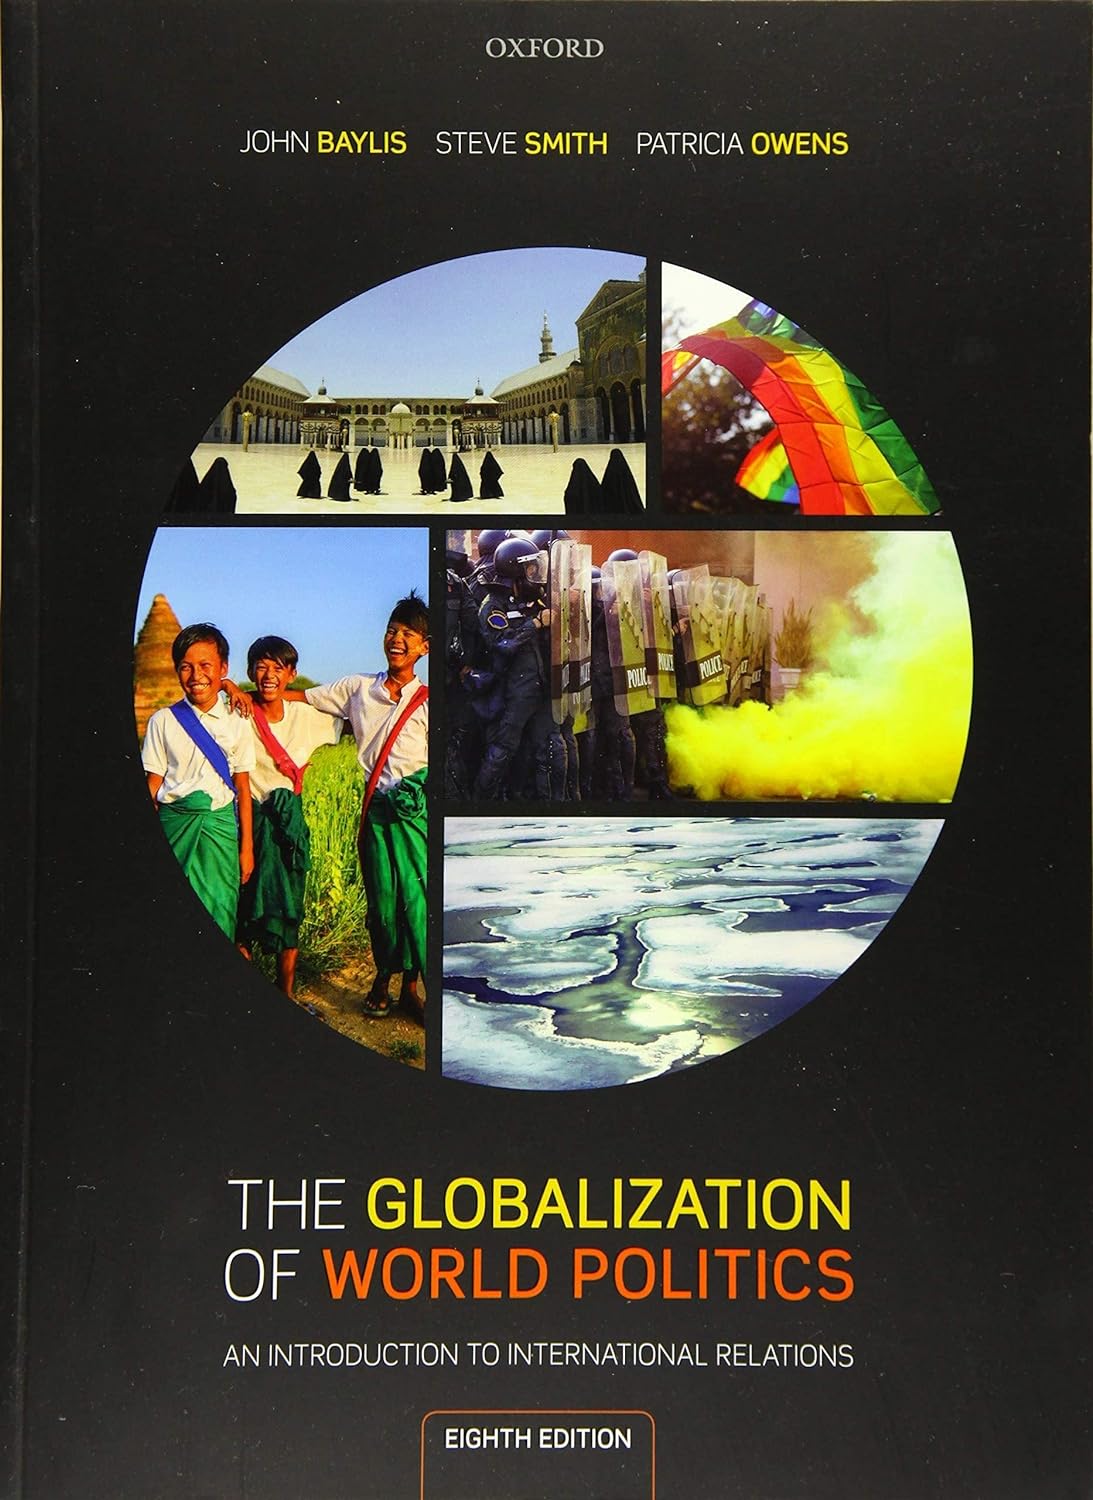 The Globalization of World Politics by Baylis full test bank